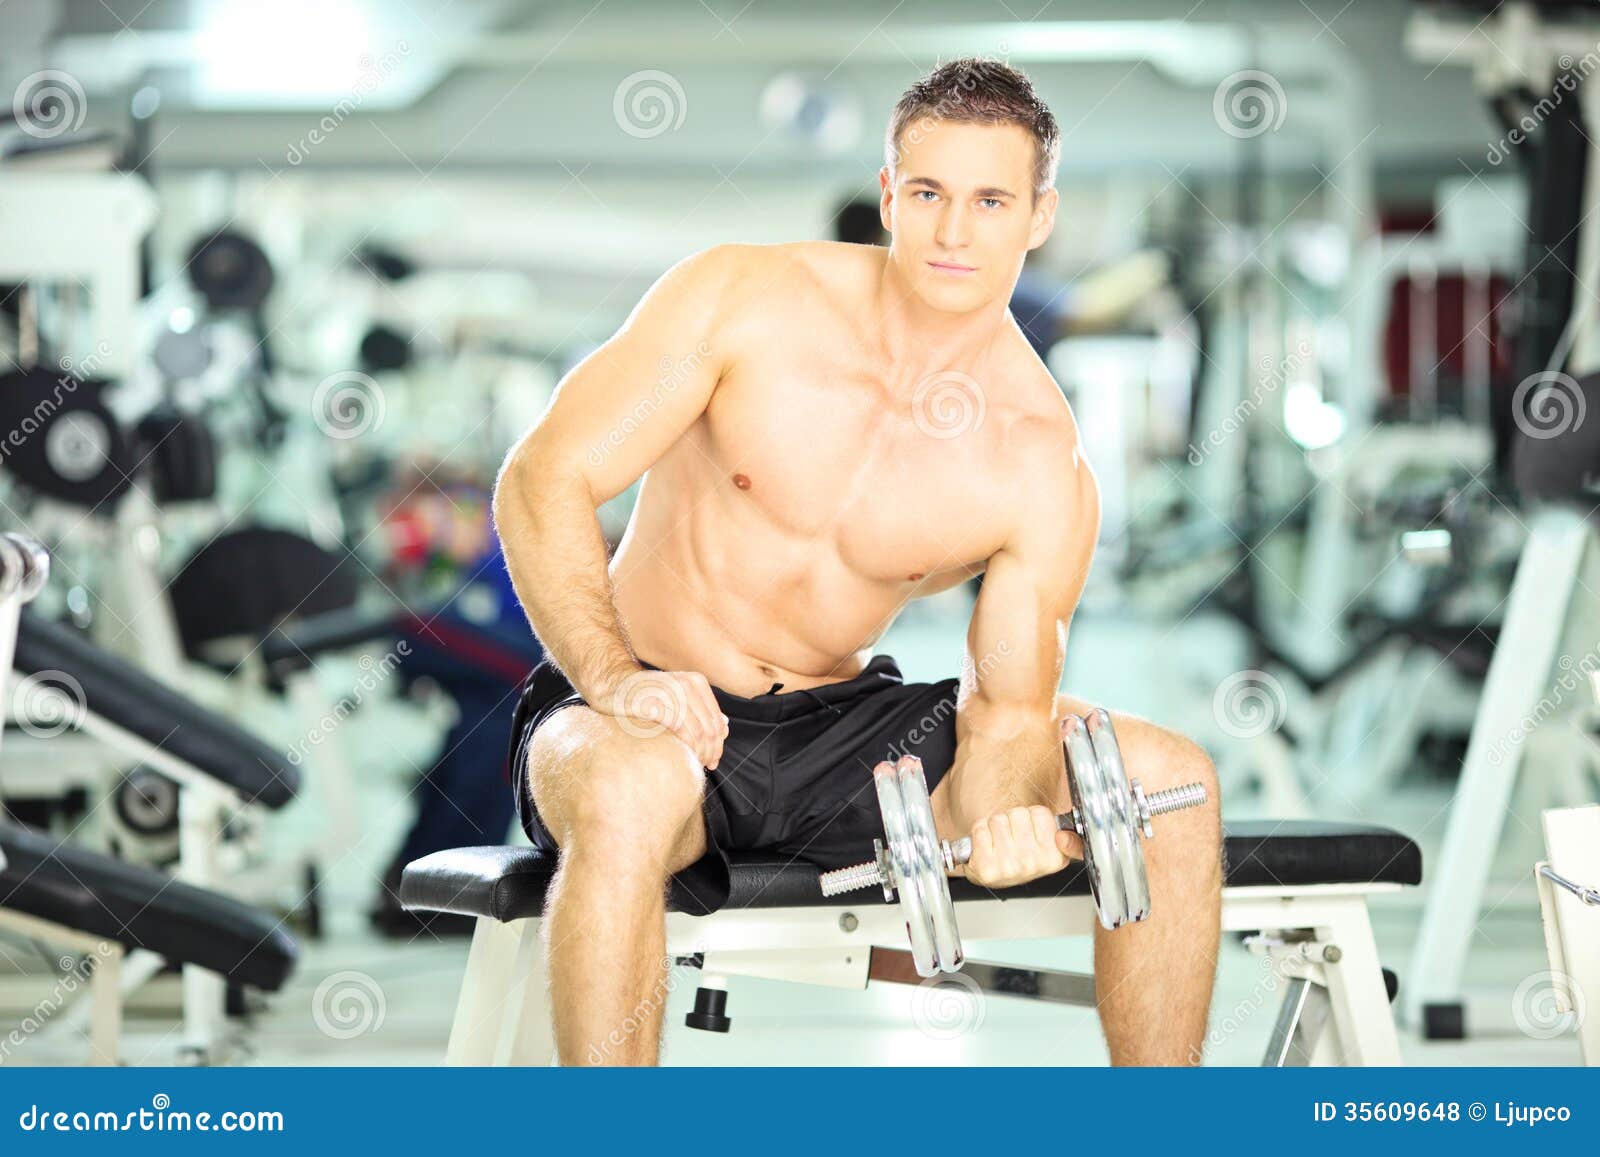 Shirtless Male Athletic Flexing Muscular Dudes Pool Sunbathing PHOTO 4X6 C11